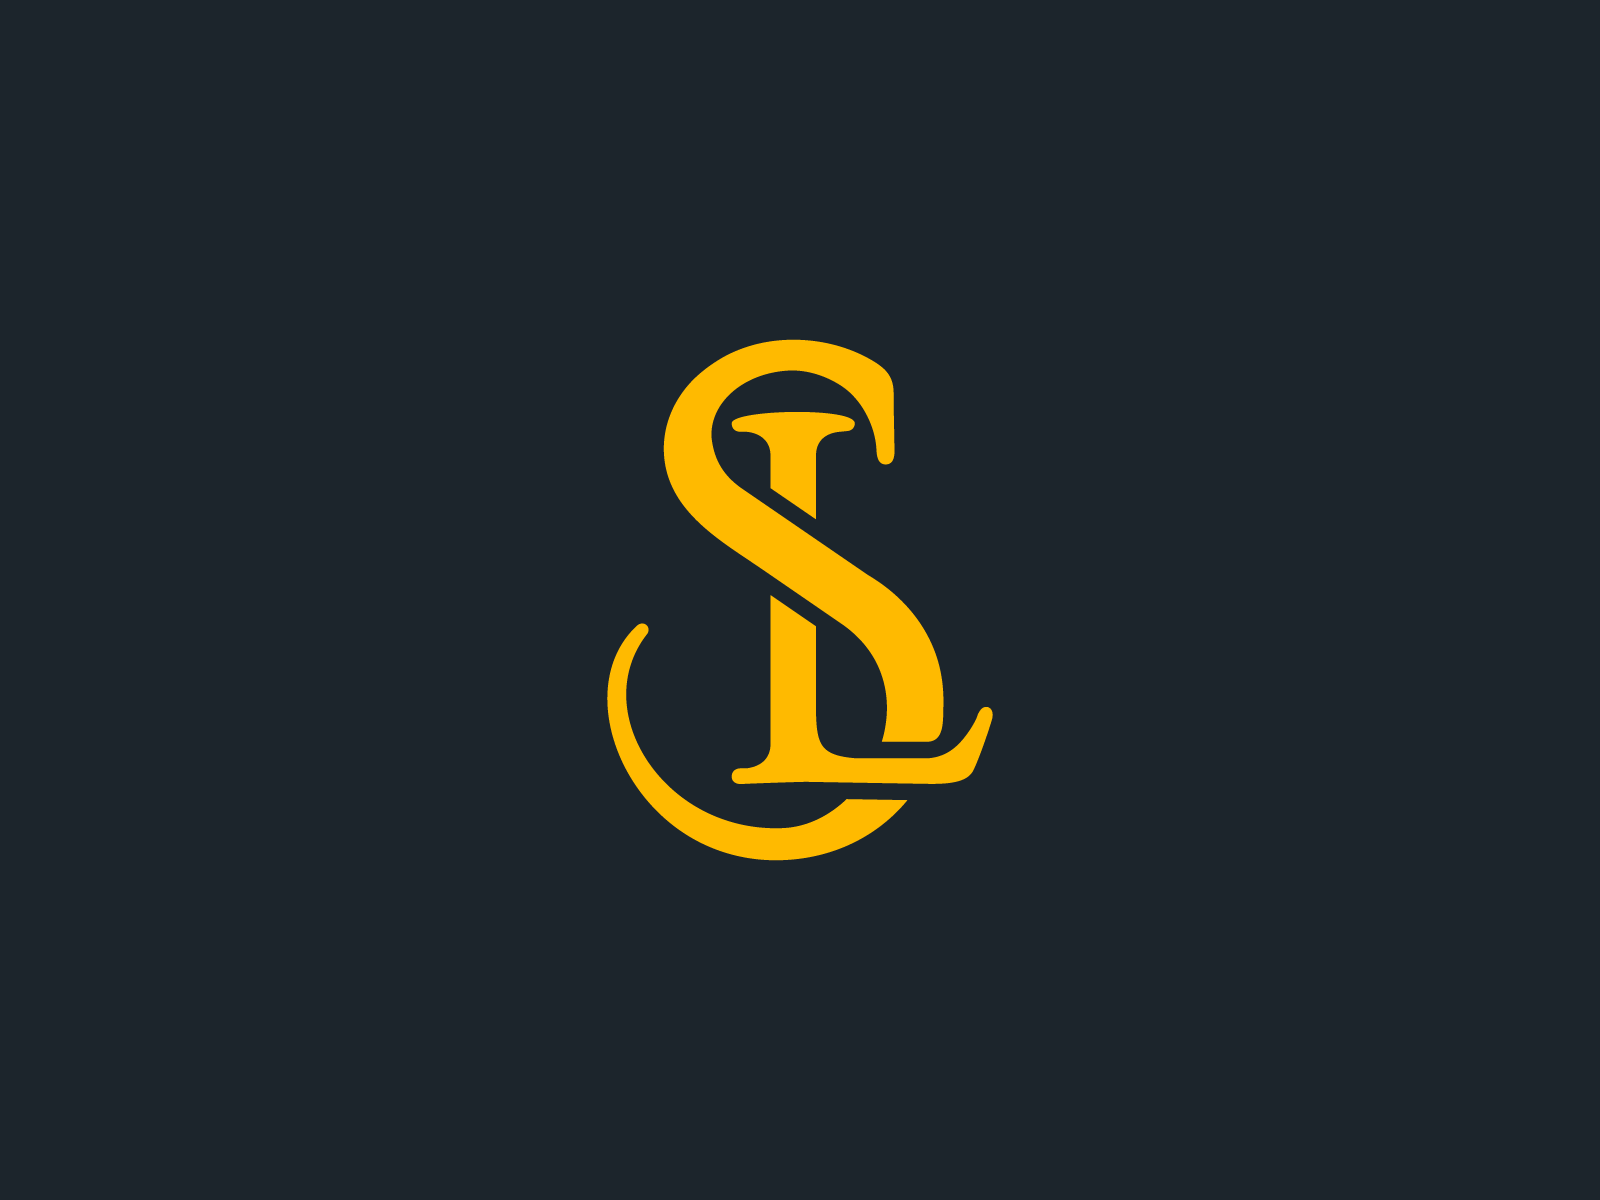 S L Monogram By Nick Budrewicz On Dribbble